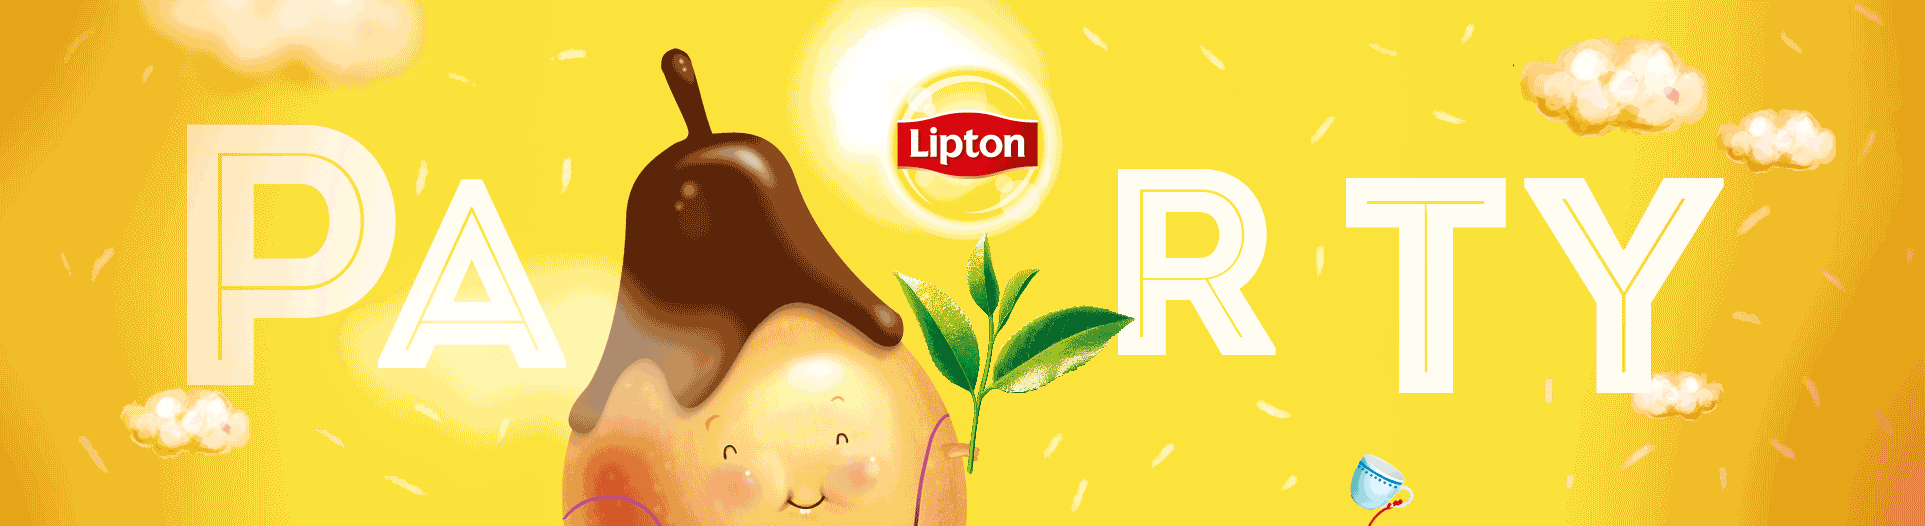 Lipton packaging design, брендинговое агентство Depot WPF